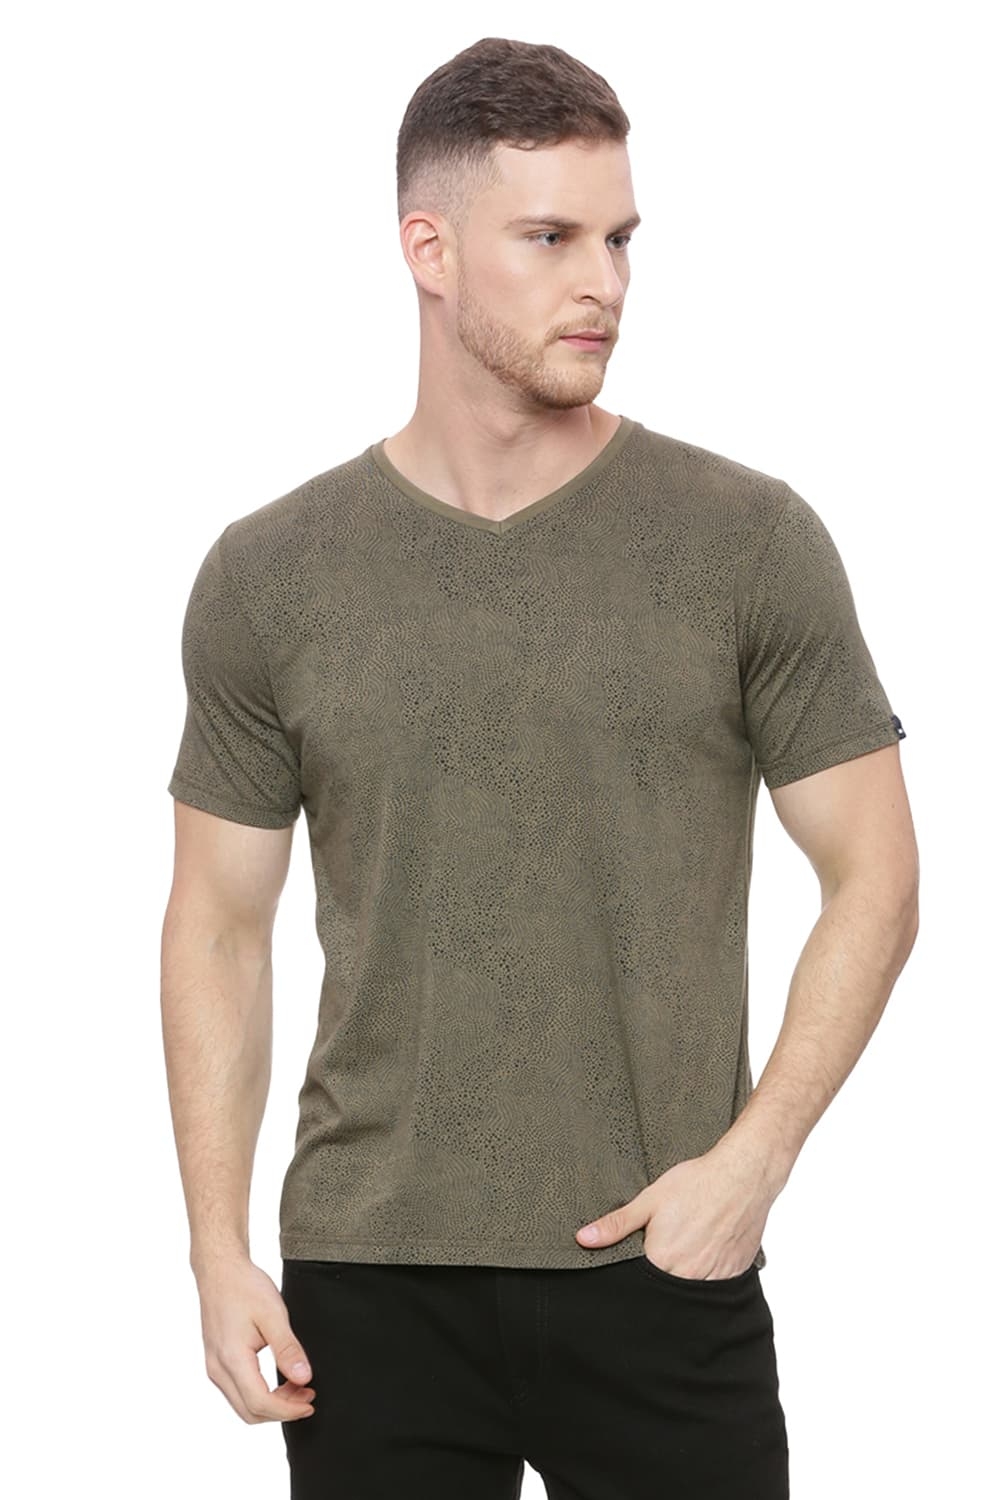 BASICS | Basics Muscle Fit Harvest Gold Printed V Neck T Shirt